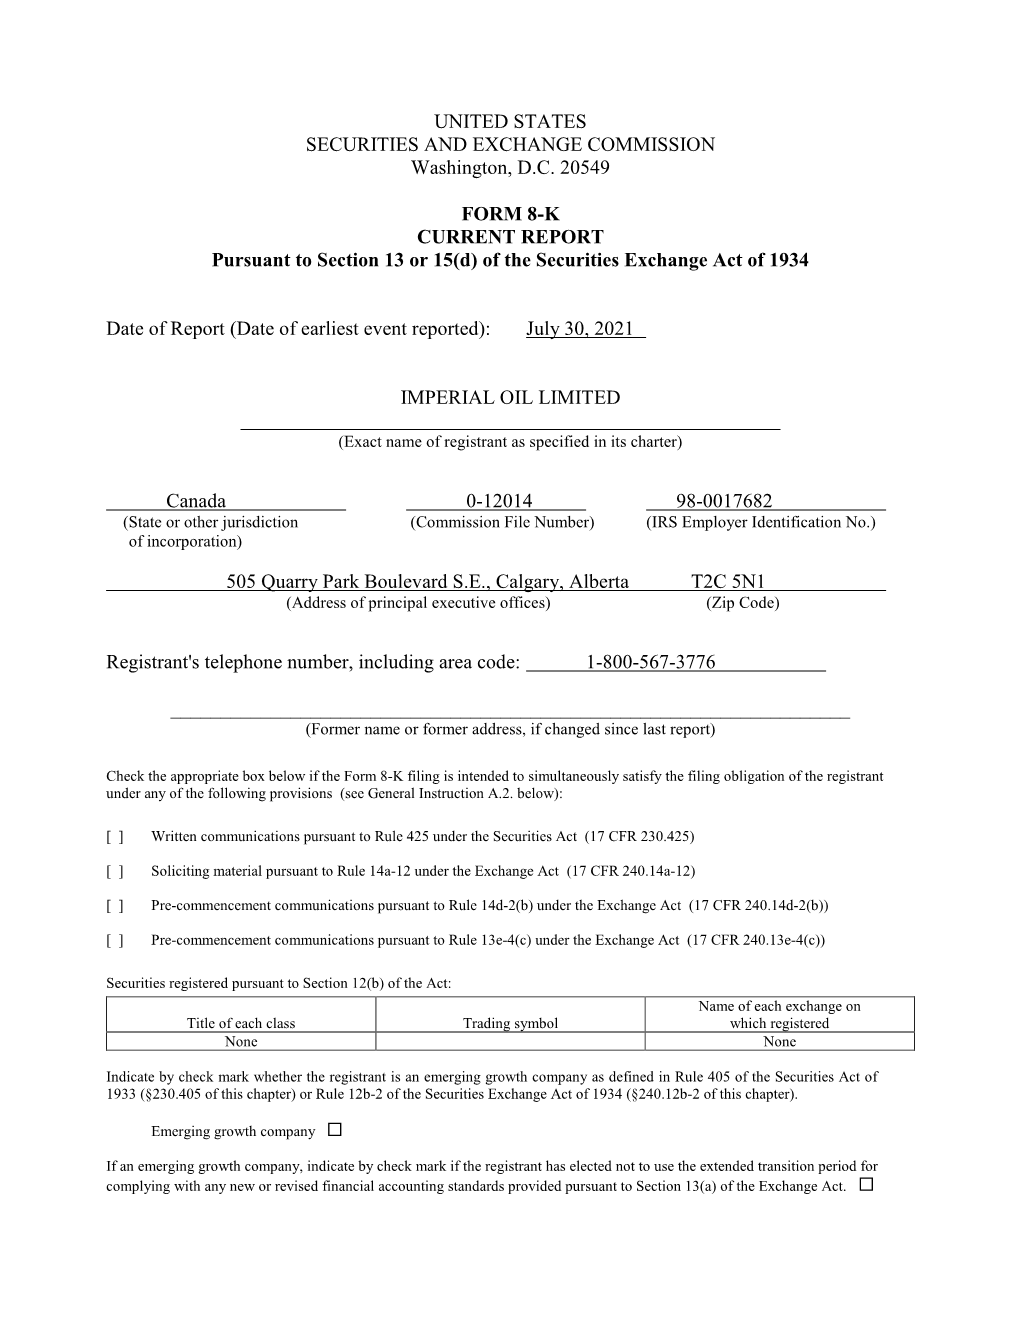 Imperial Oil Limited Q2 2021 SEC Form 8-K -- 29Jul21 Filing